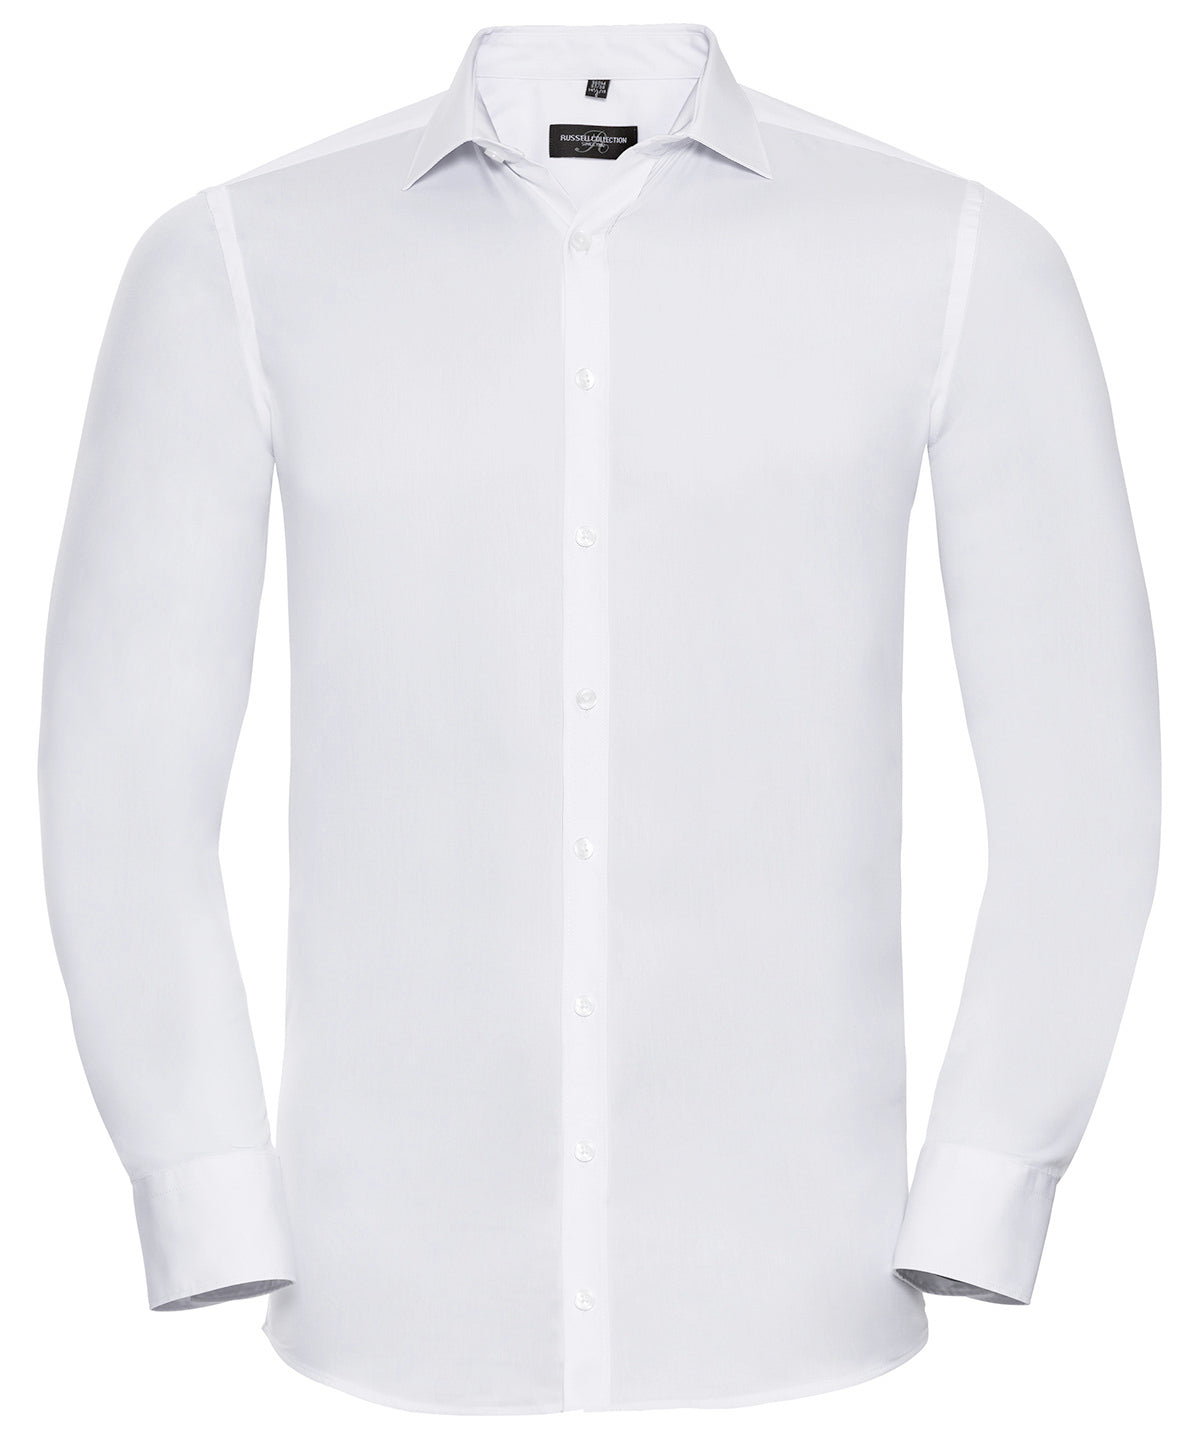 Bolir - Long Sleeve Ultimate Stretch Shirt